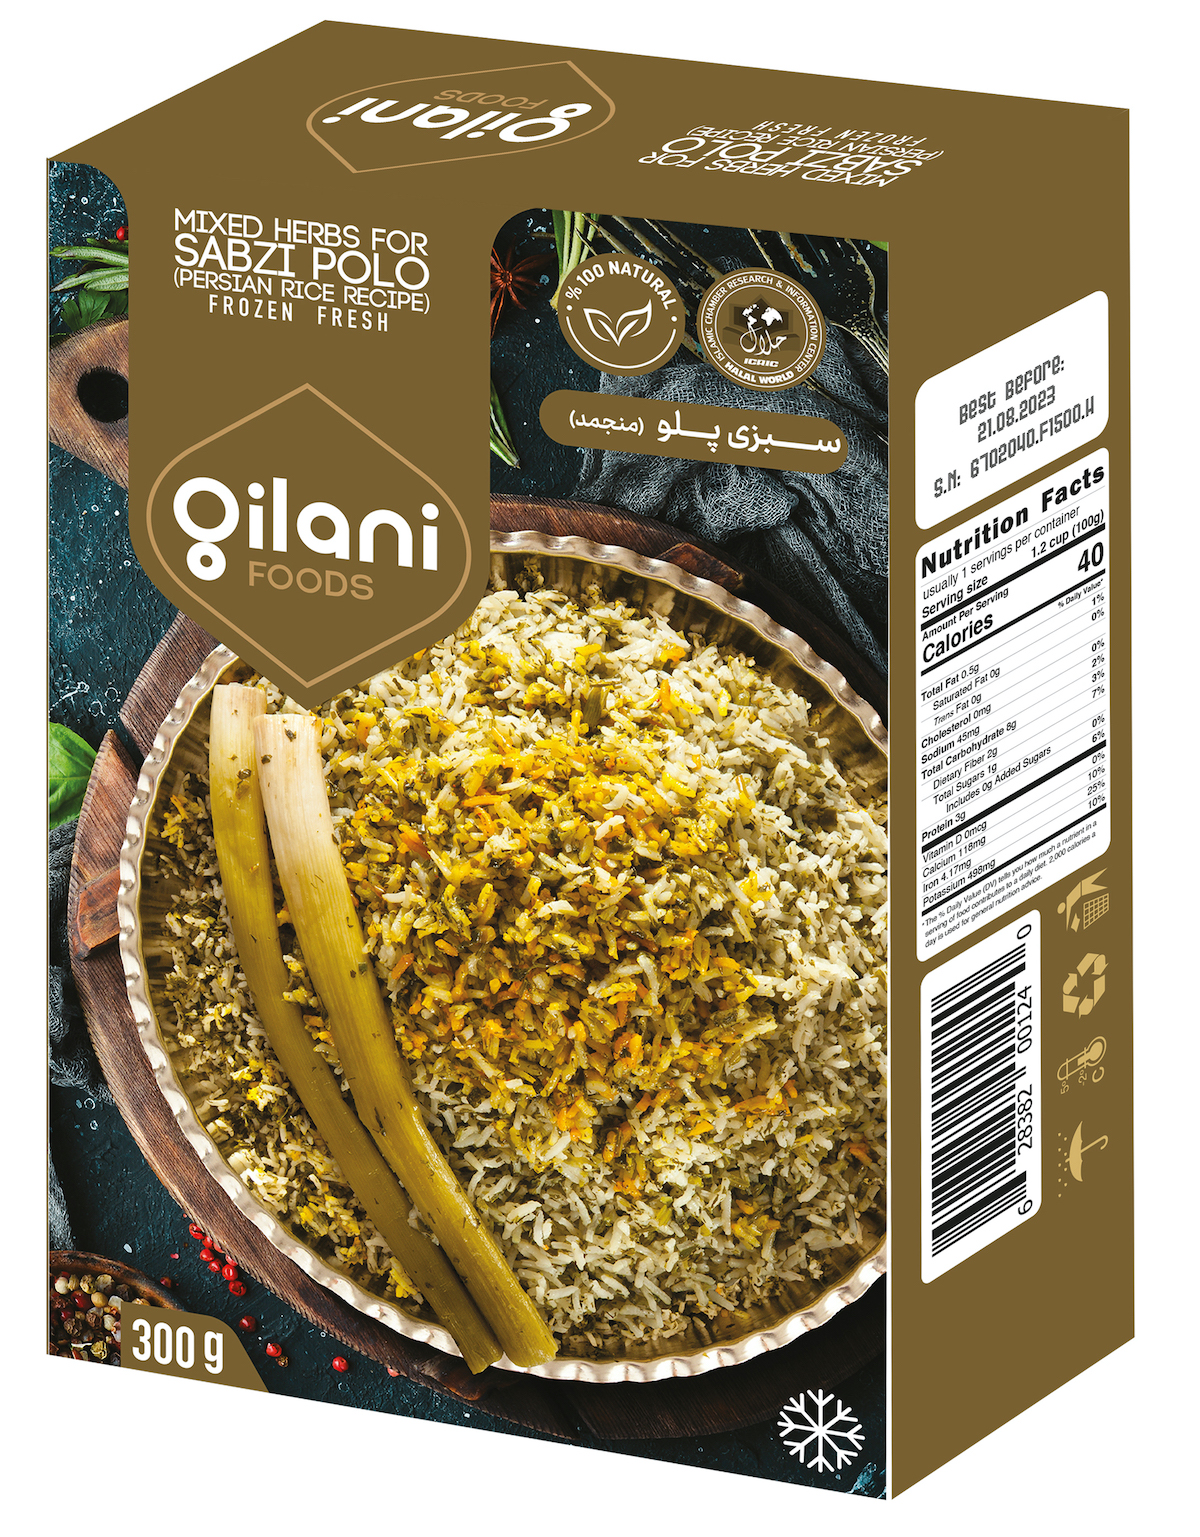 Gilani Frozen Mixed Herbs For Sabzi Polo